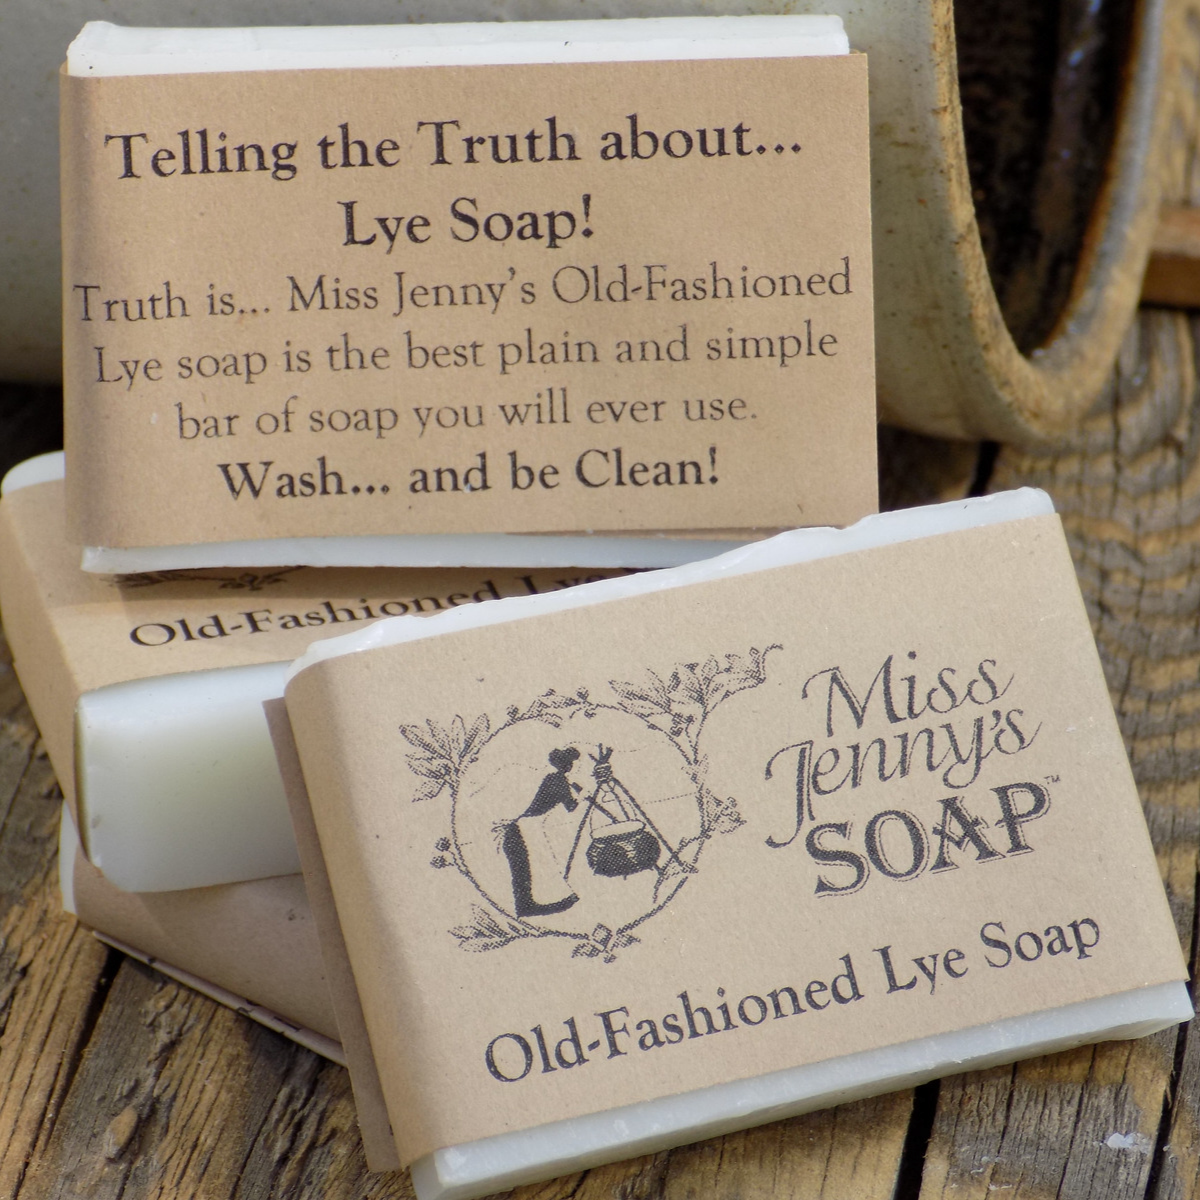 Miss Jenny’s Old-Fashioned Lye Soap